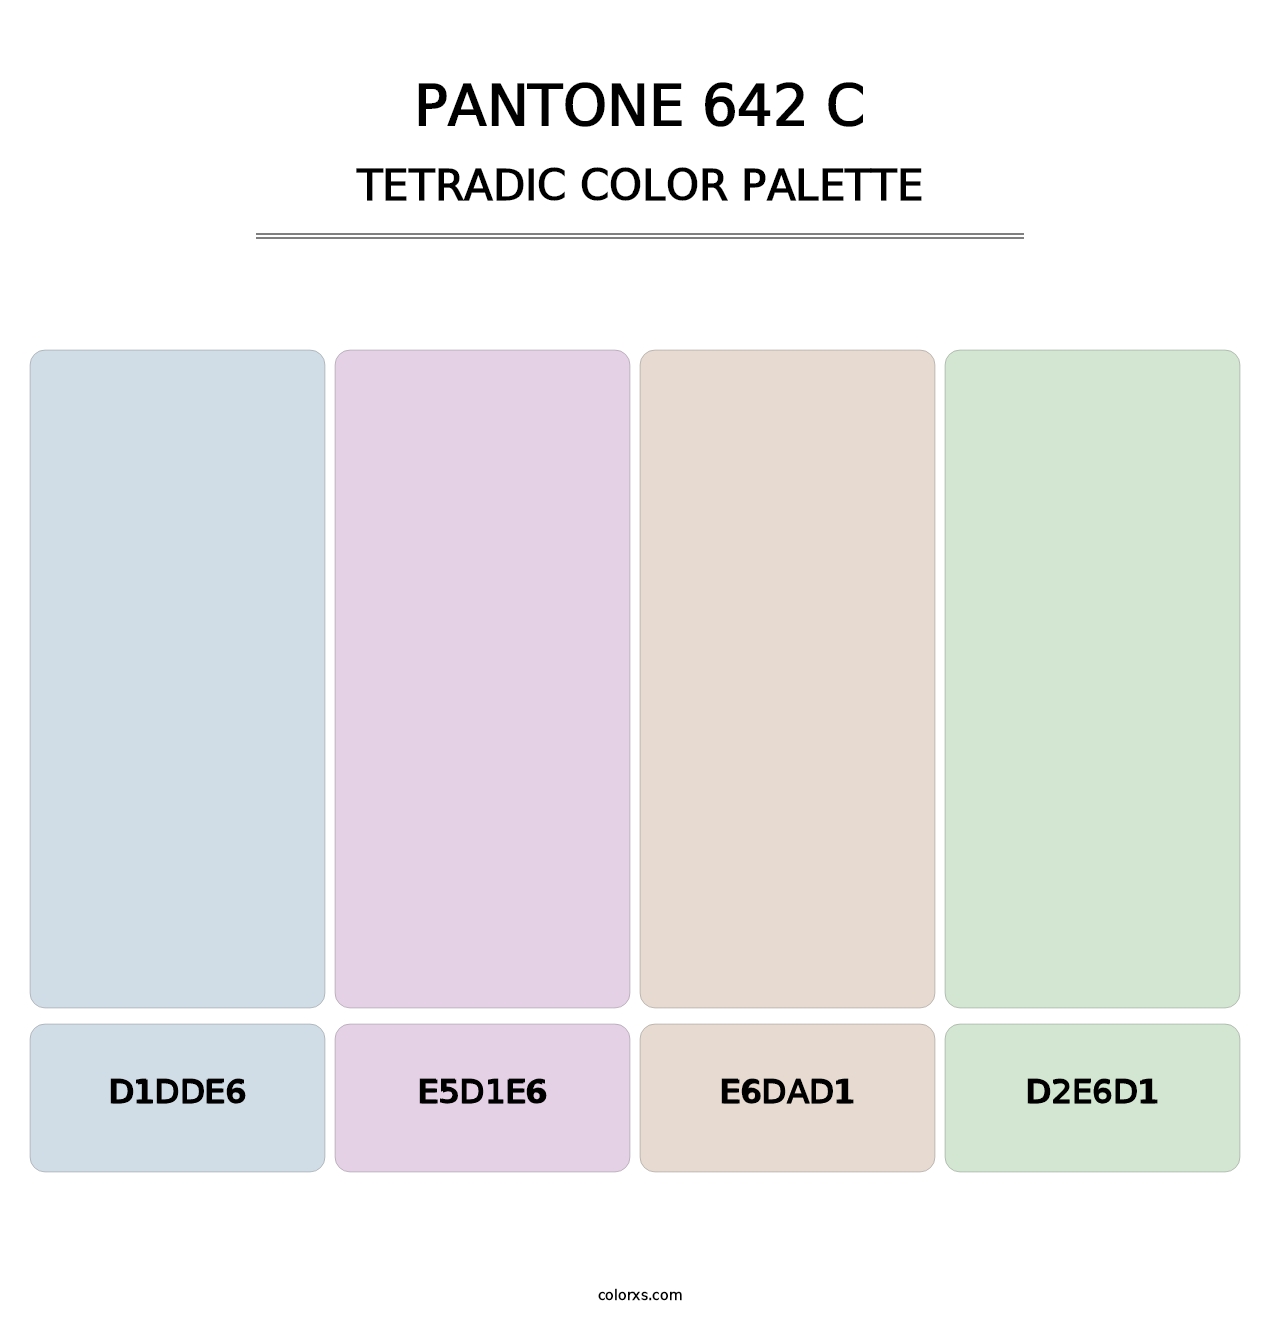 PANTONE 642 C - Tetradic Color Palette